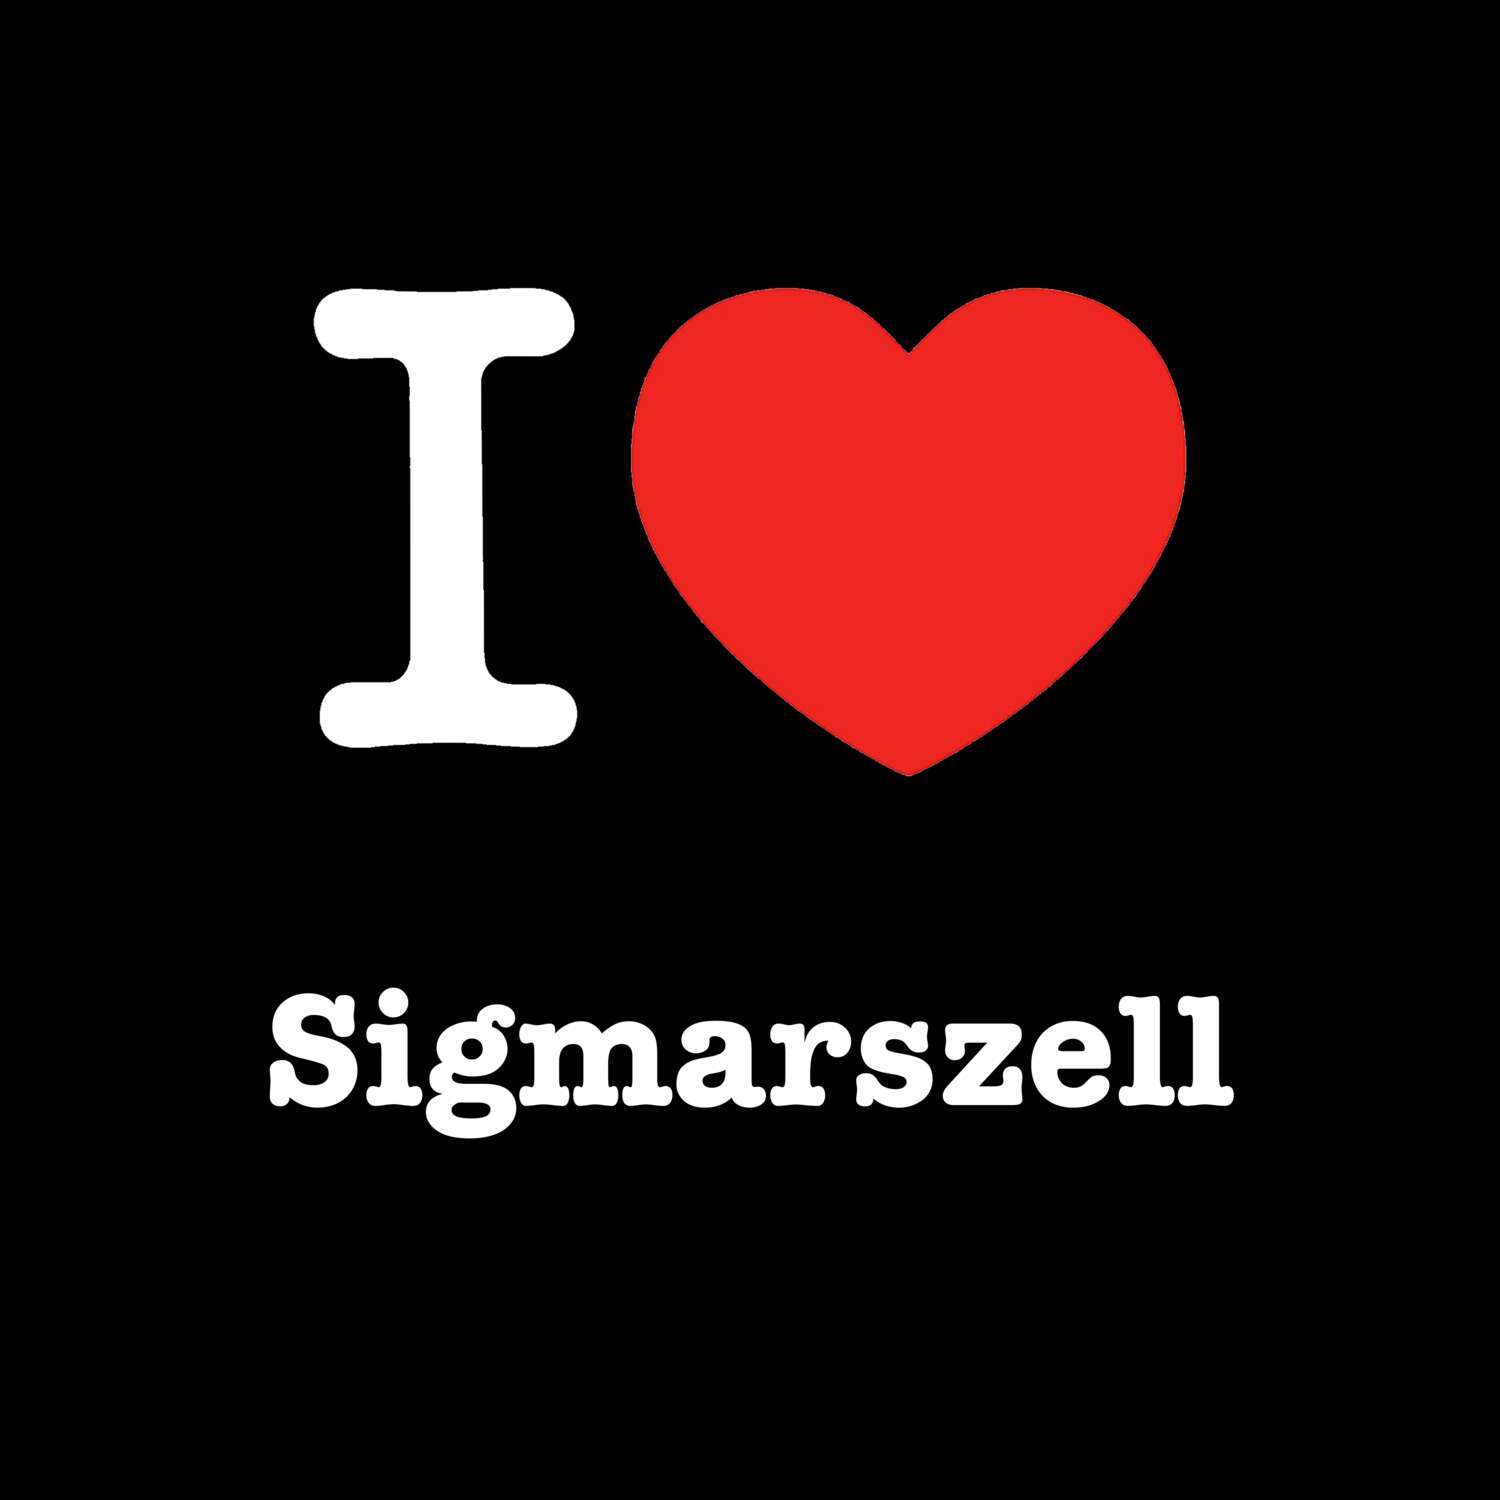 Sigmarszell T-Shirt »I love«